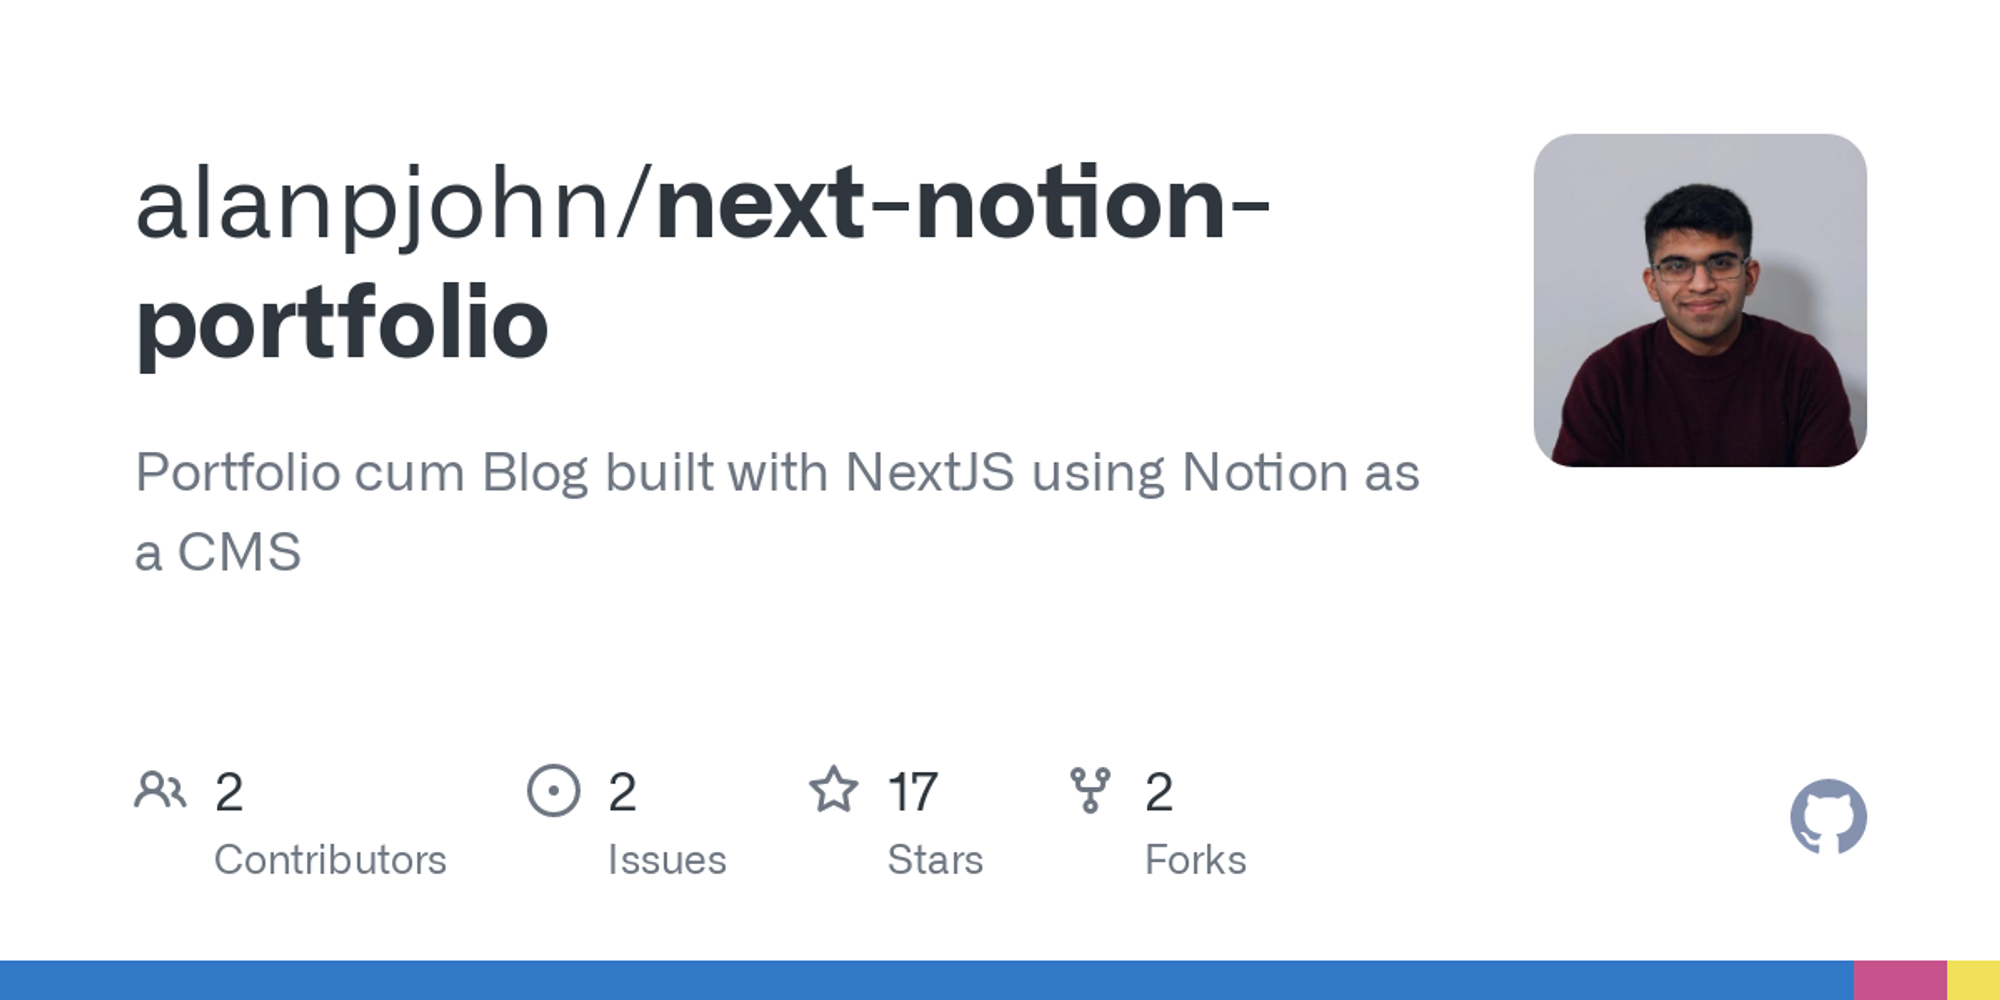 GitHub - alanpjohn/next-notion-portfolio: Portfolio cum Blog built with NextJS using Notion as a CMS